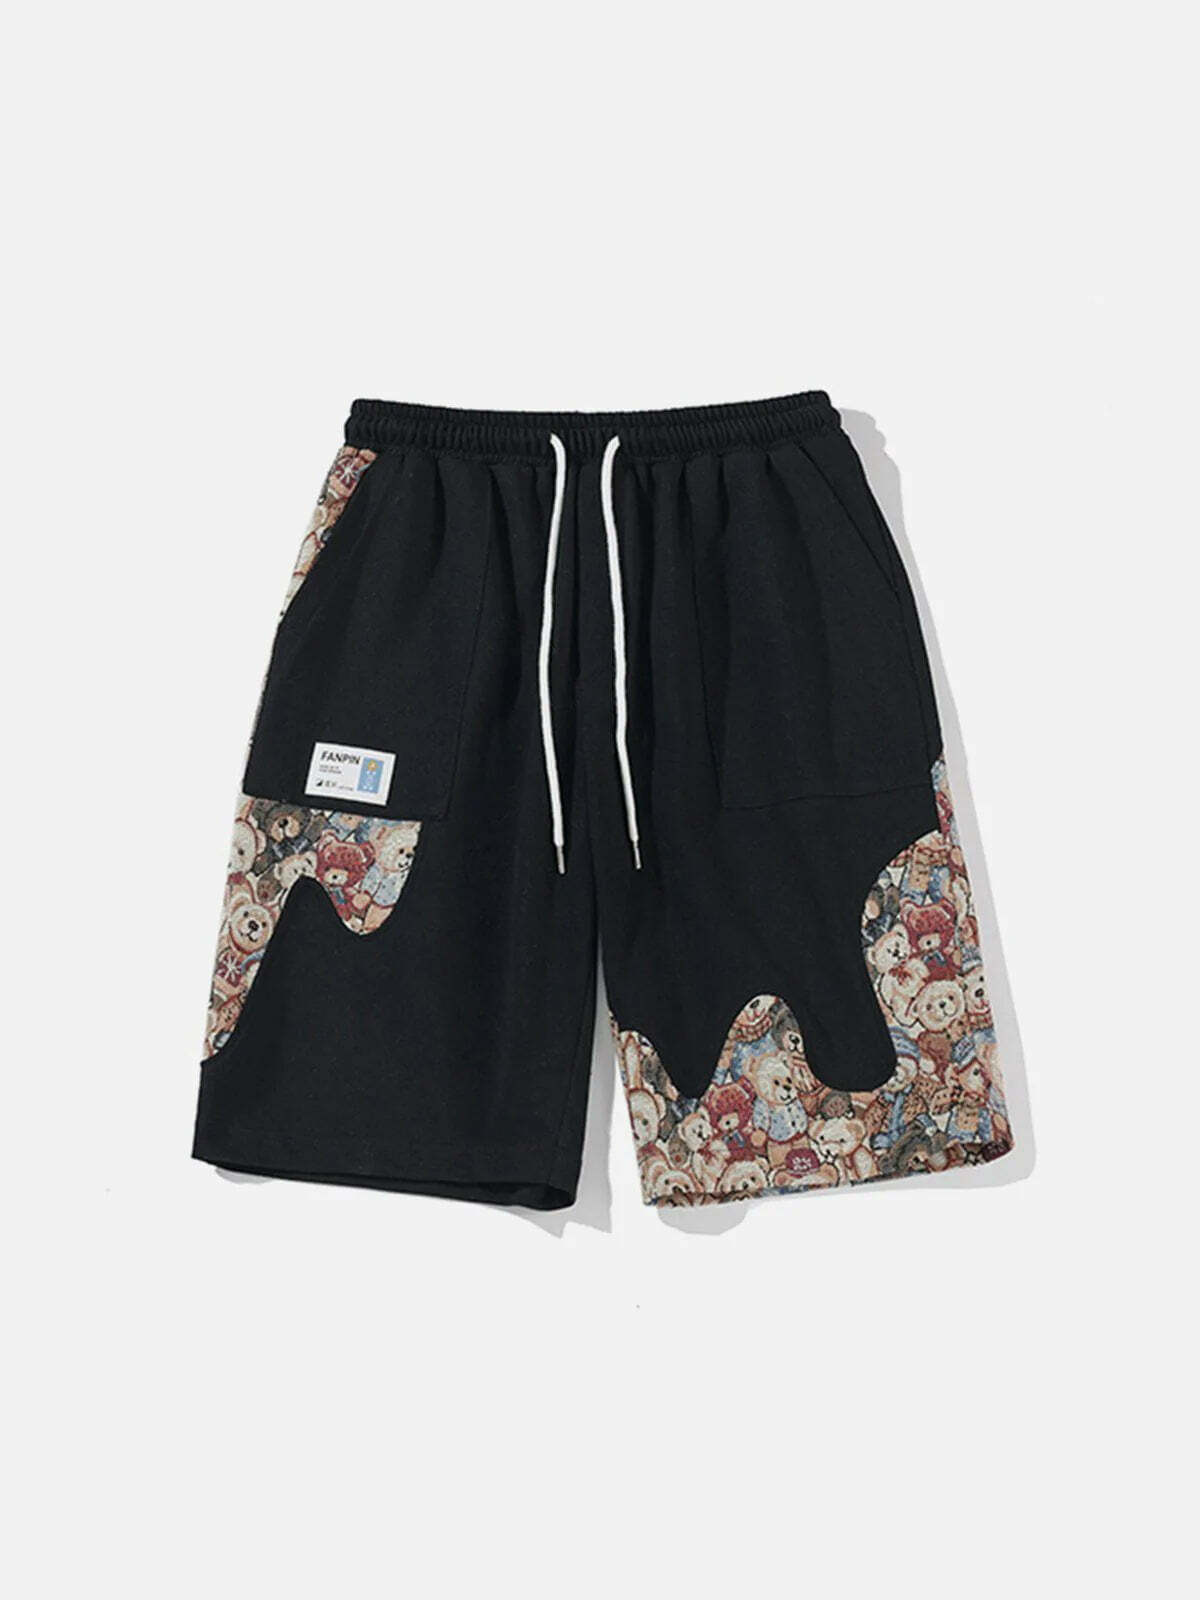 bear patchwork denim shorts retro streetwear style 2873